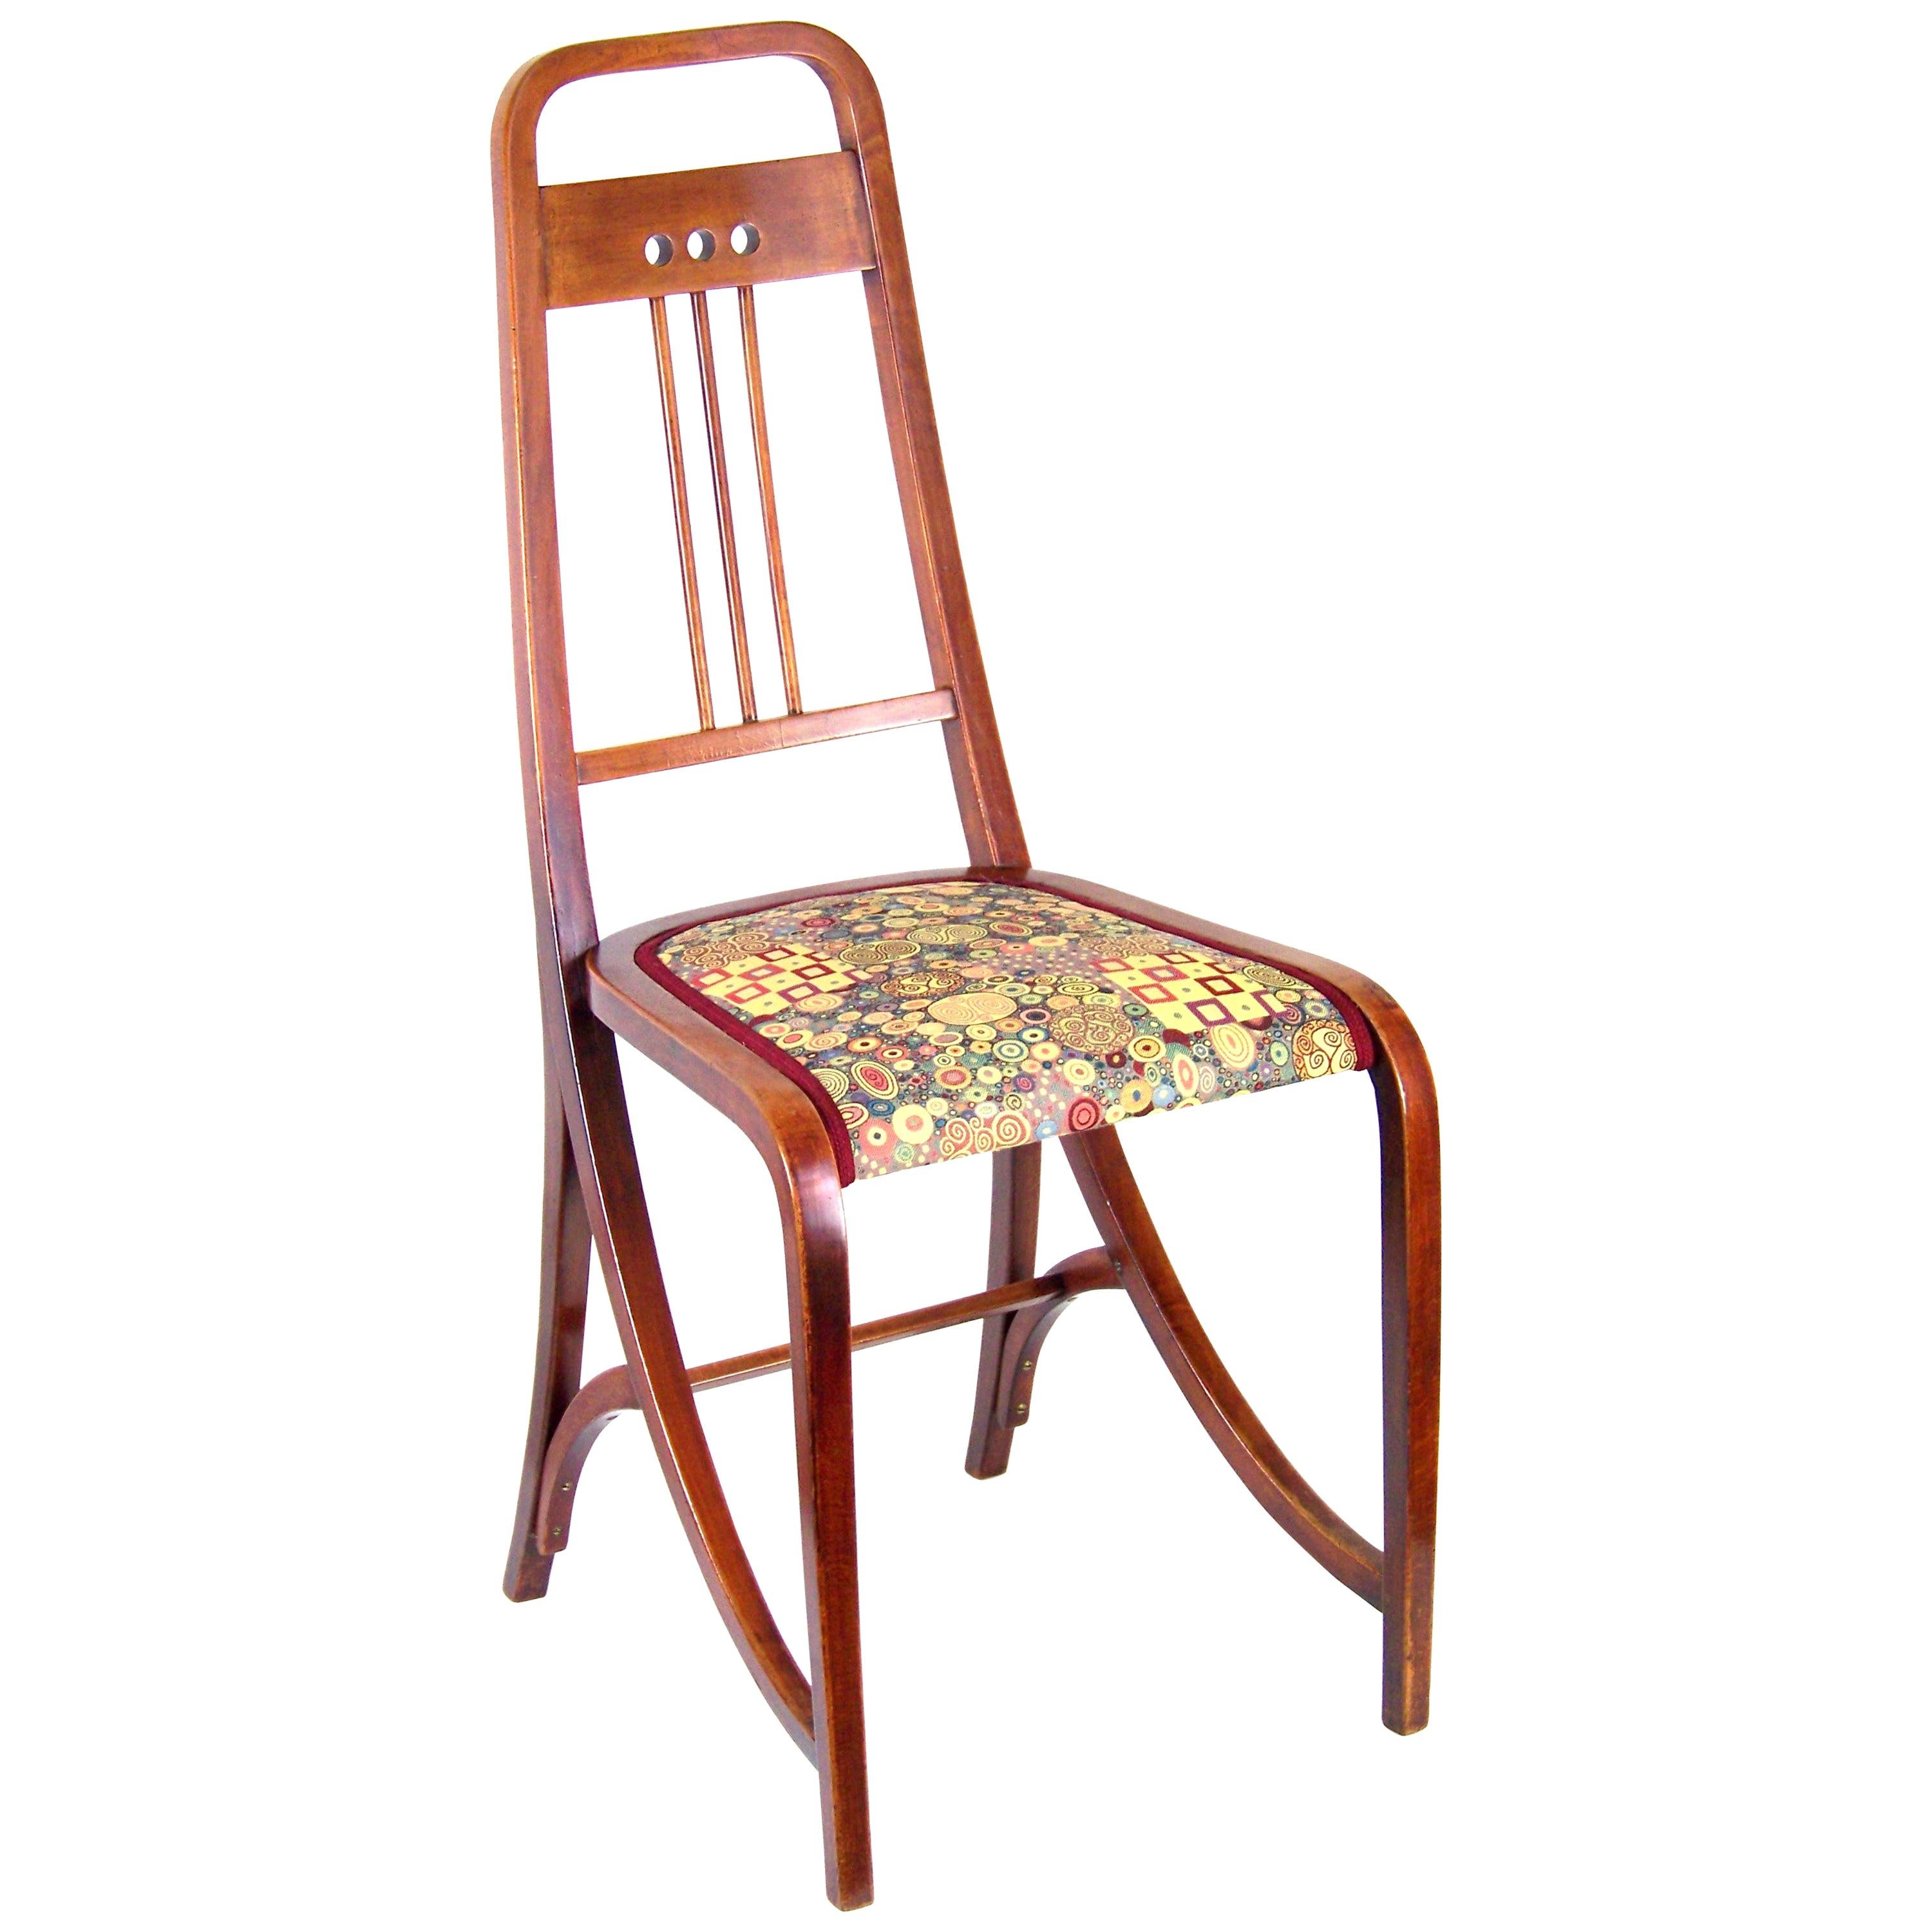 Chair Thonet Nr. 511, Since 1904, Gustav Klimt